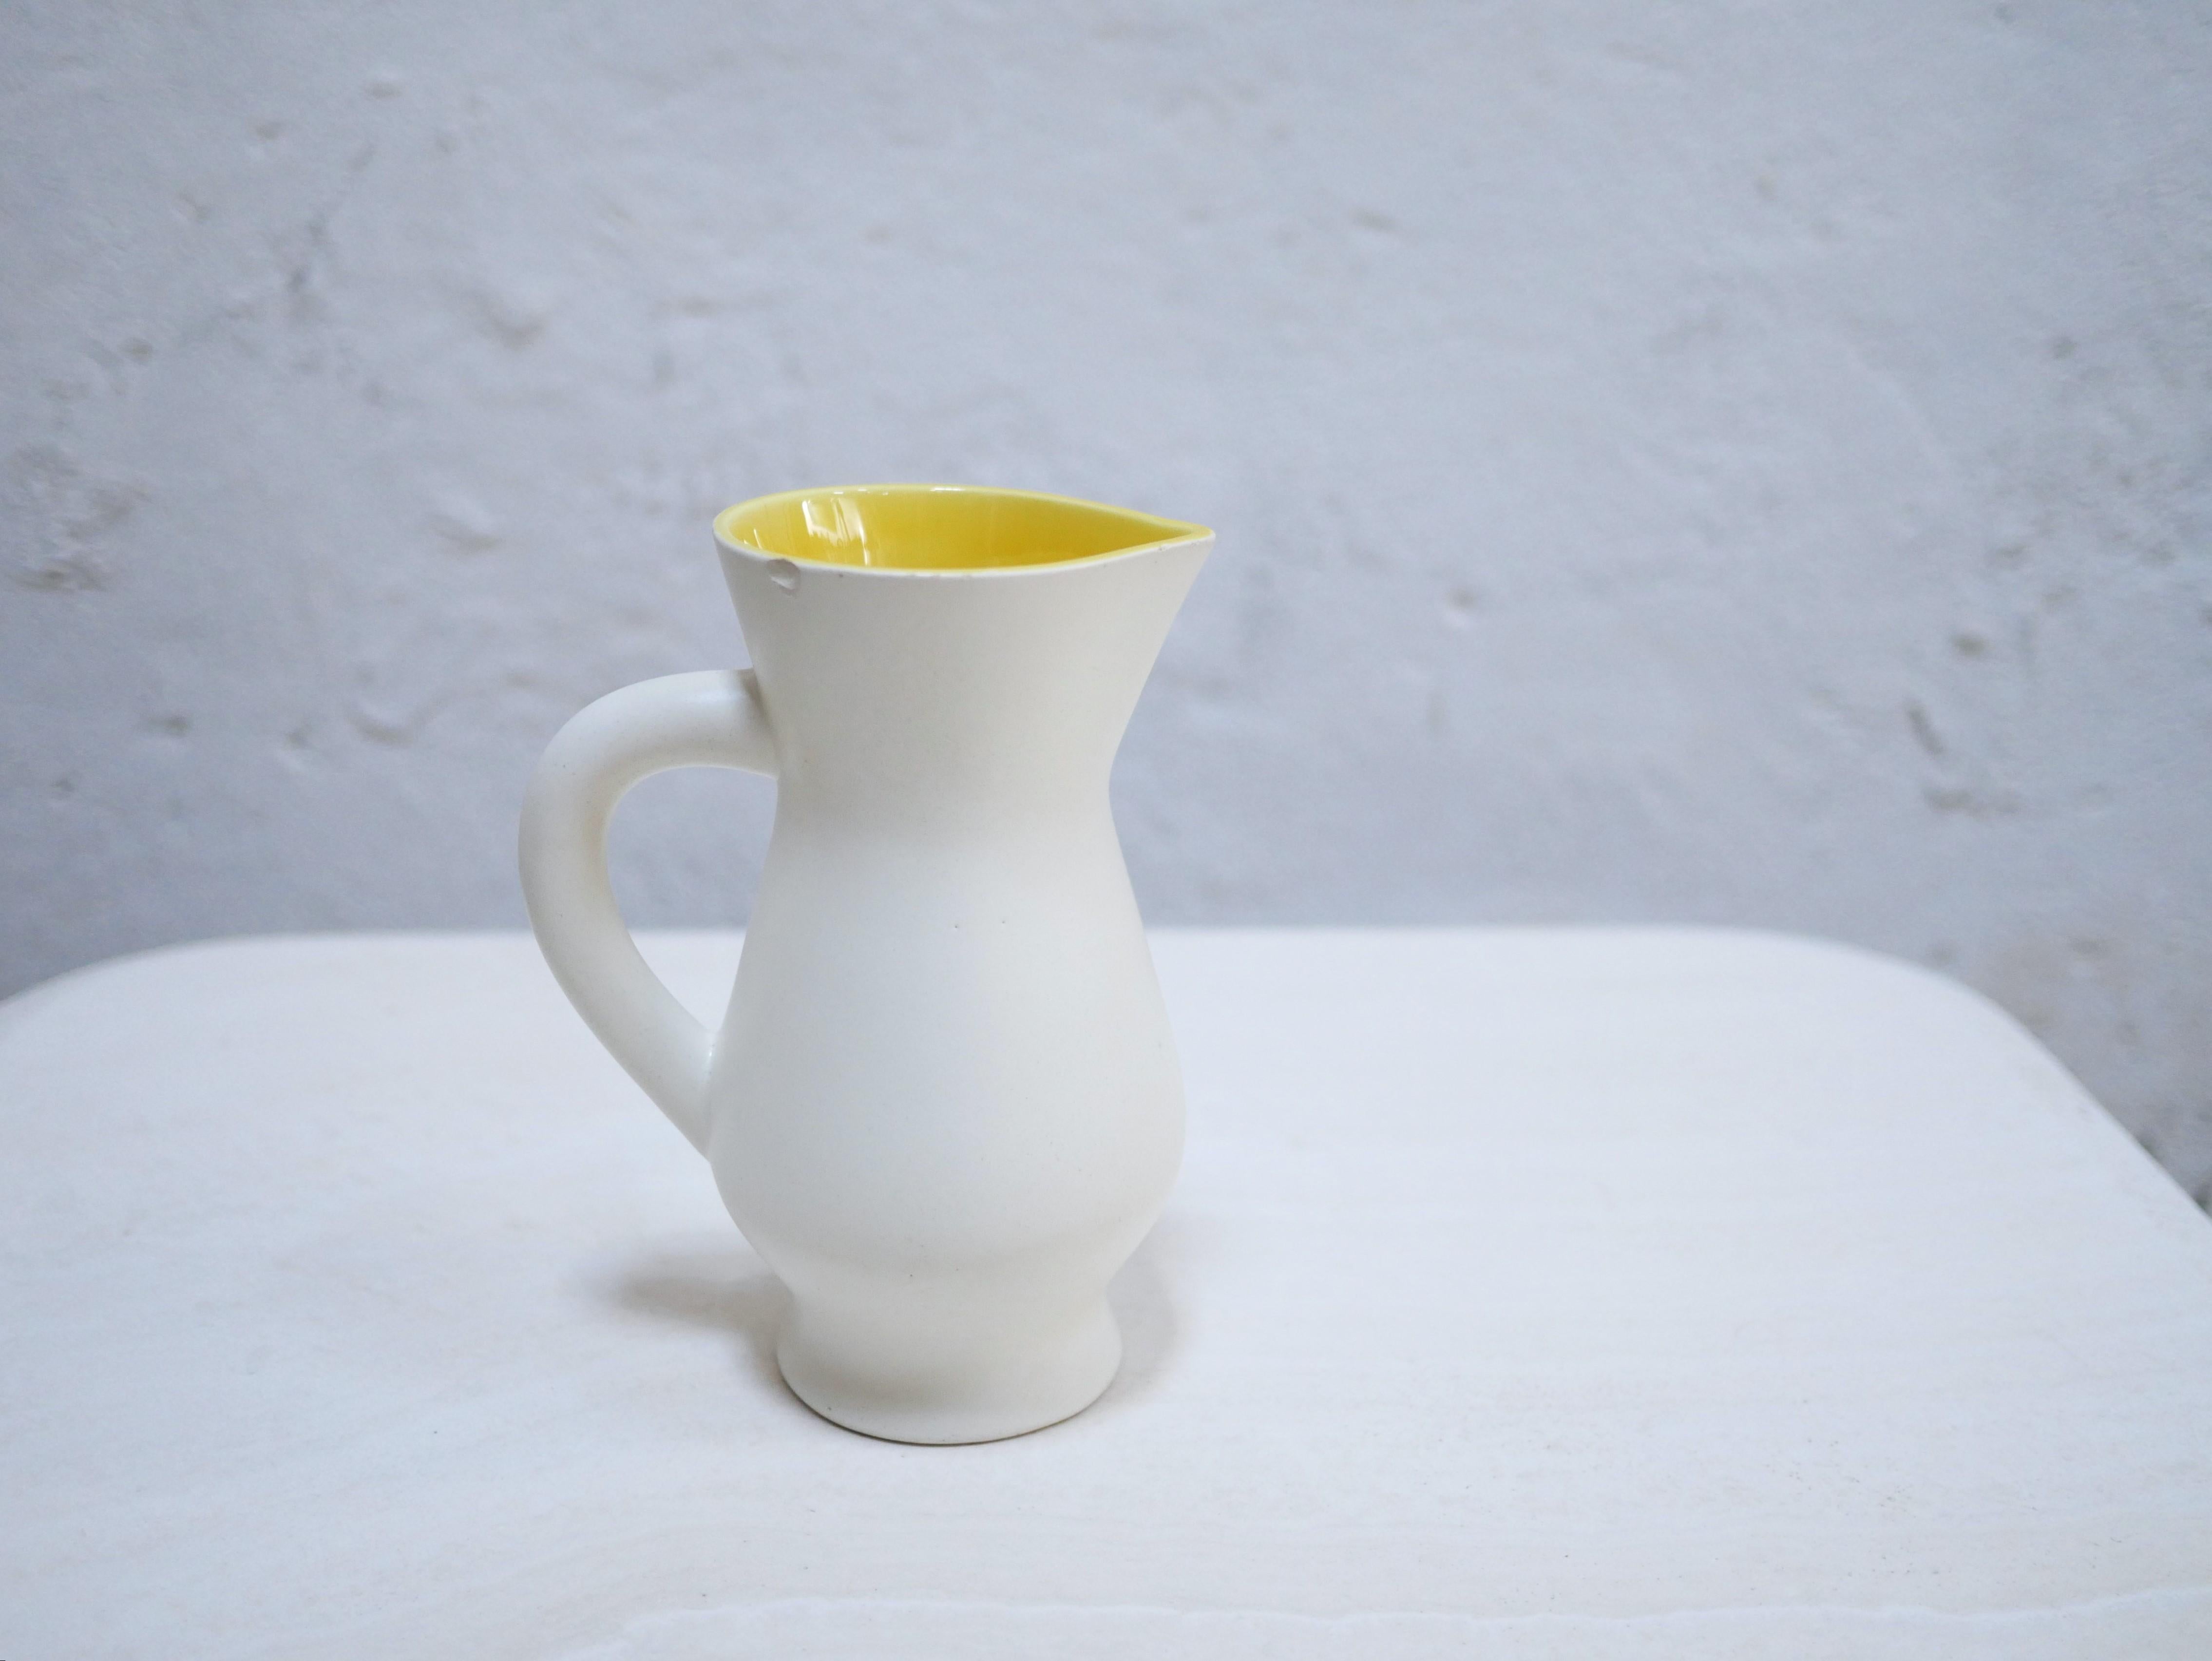 Ceramic Vintage ceramic pitcher by the Saint Clément France factory For Sale